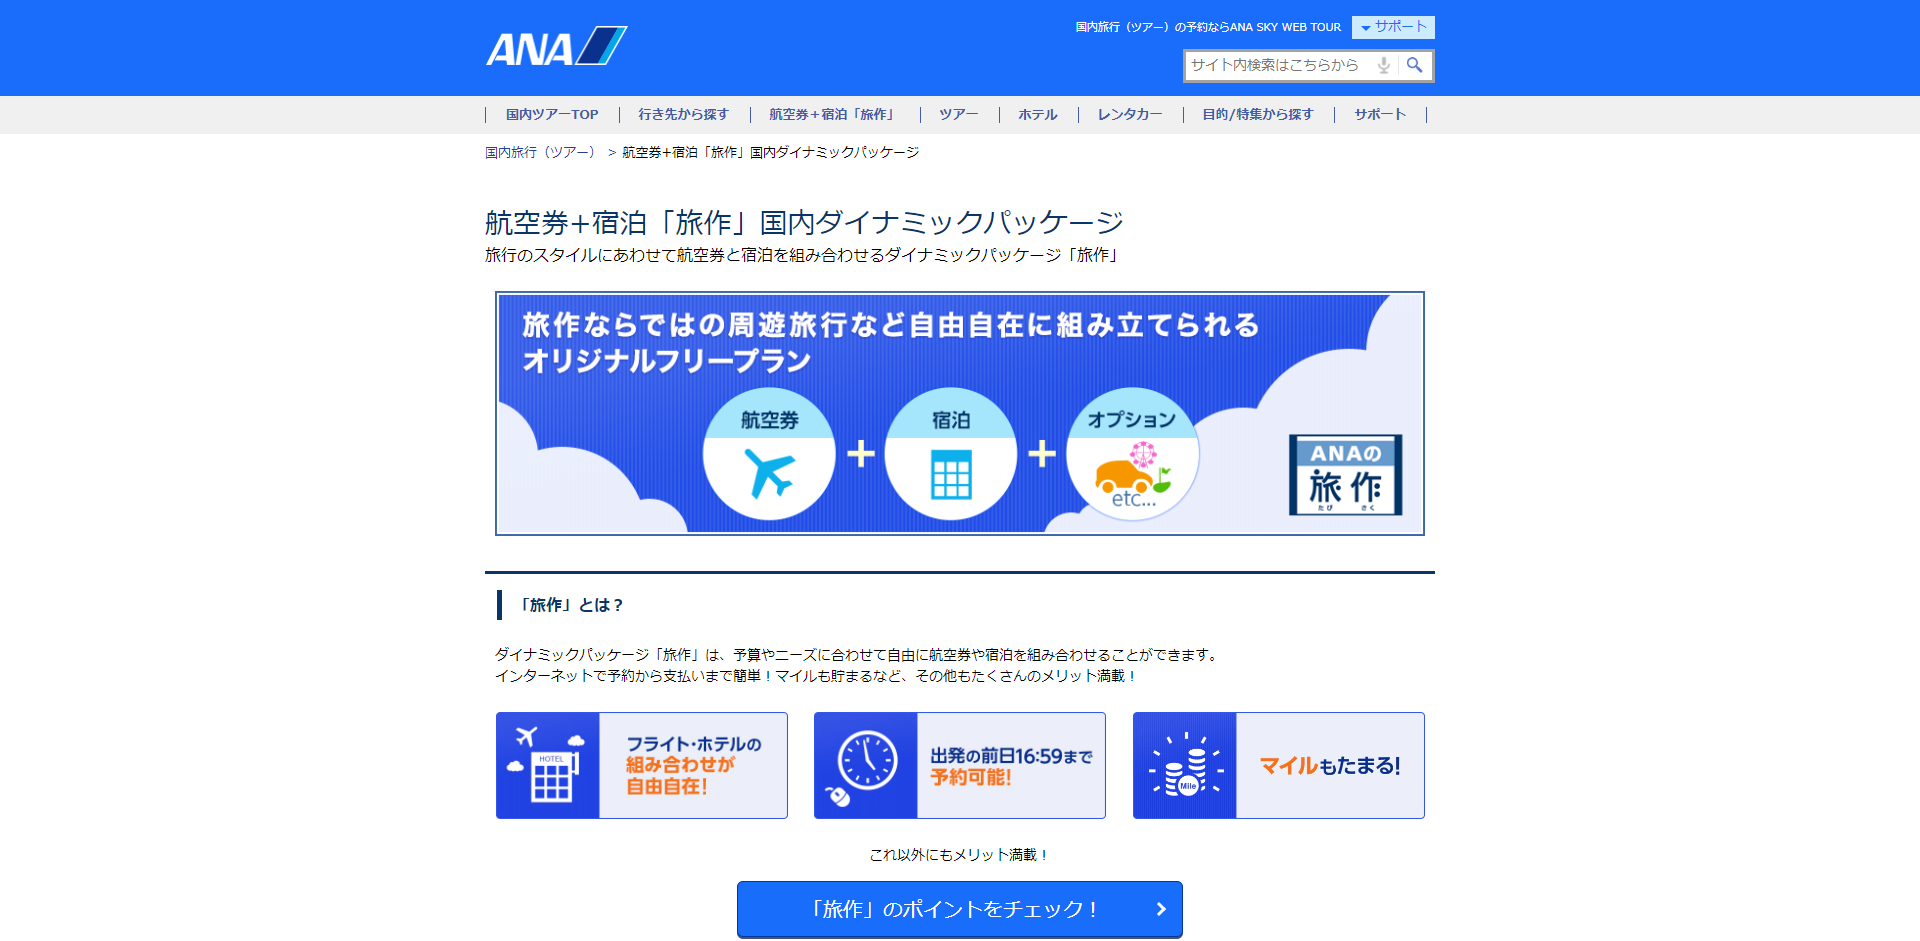 「ANA（全日本空輸）」の公式サイト